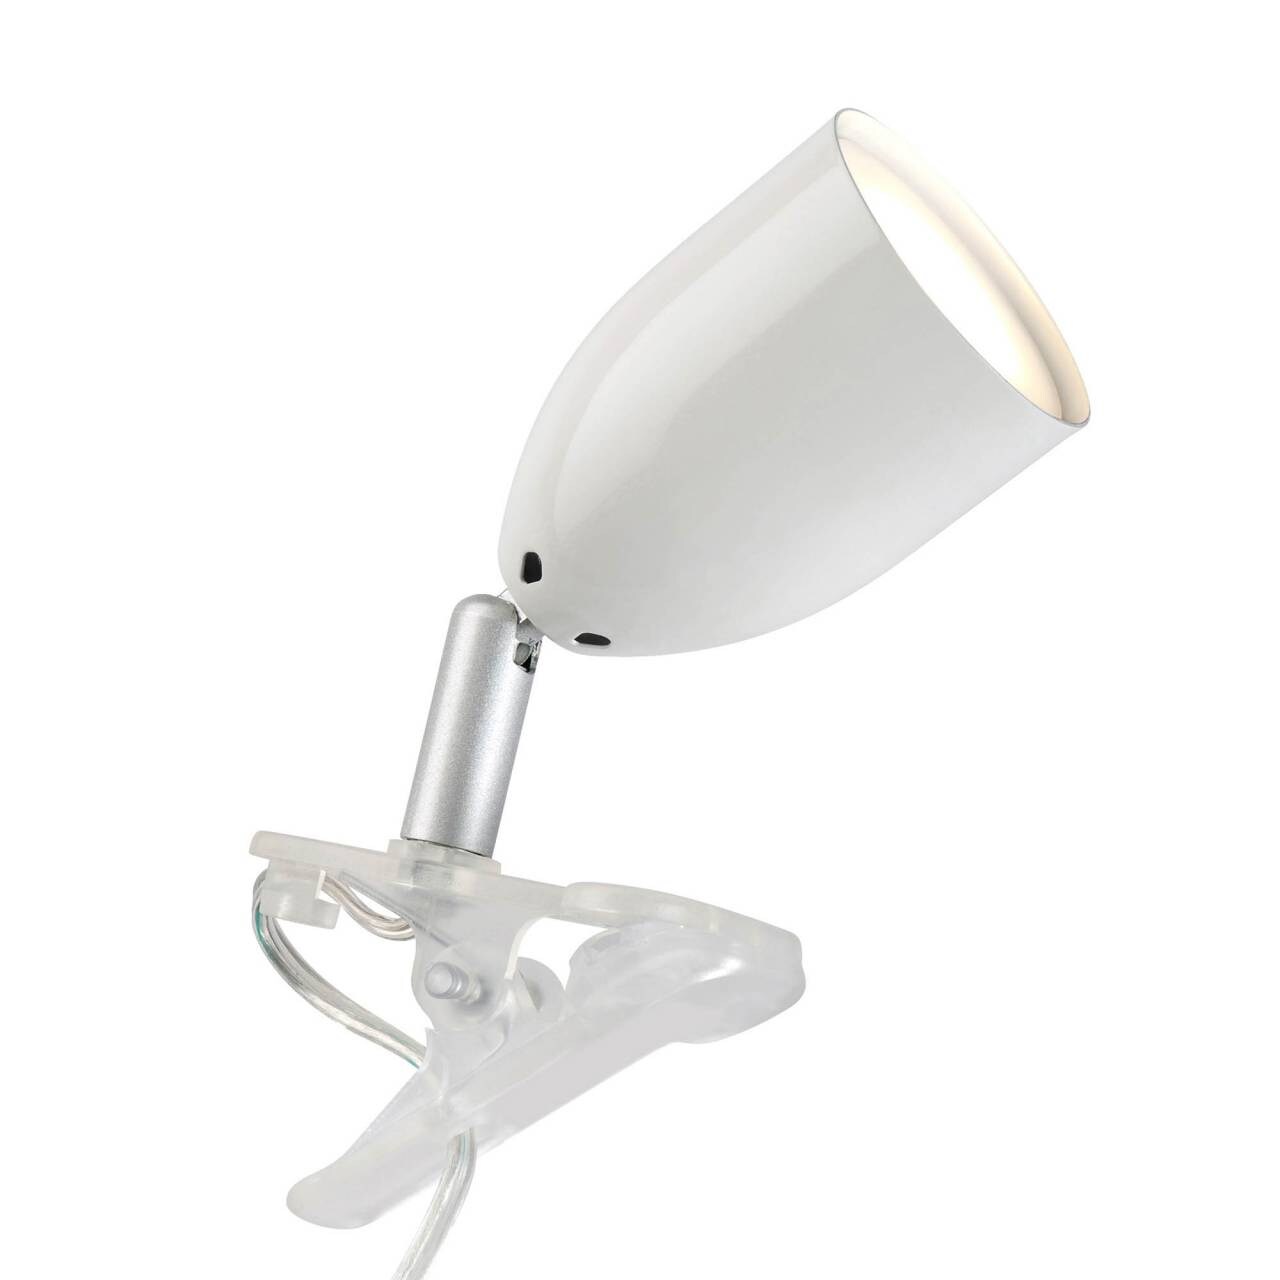 BRILLIANT Lampe Leo LED Klemmleuchte weiß   1x LED-PAR51, GU10, 3W LED-Reflektorlampe inklusive, (240lm, 2700K)   Mit Sc